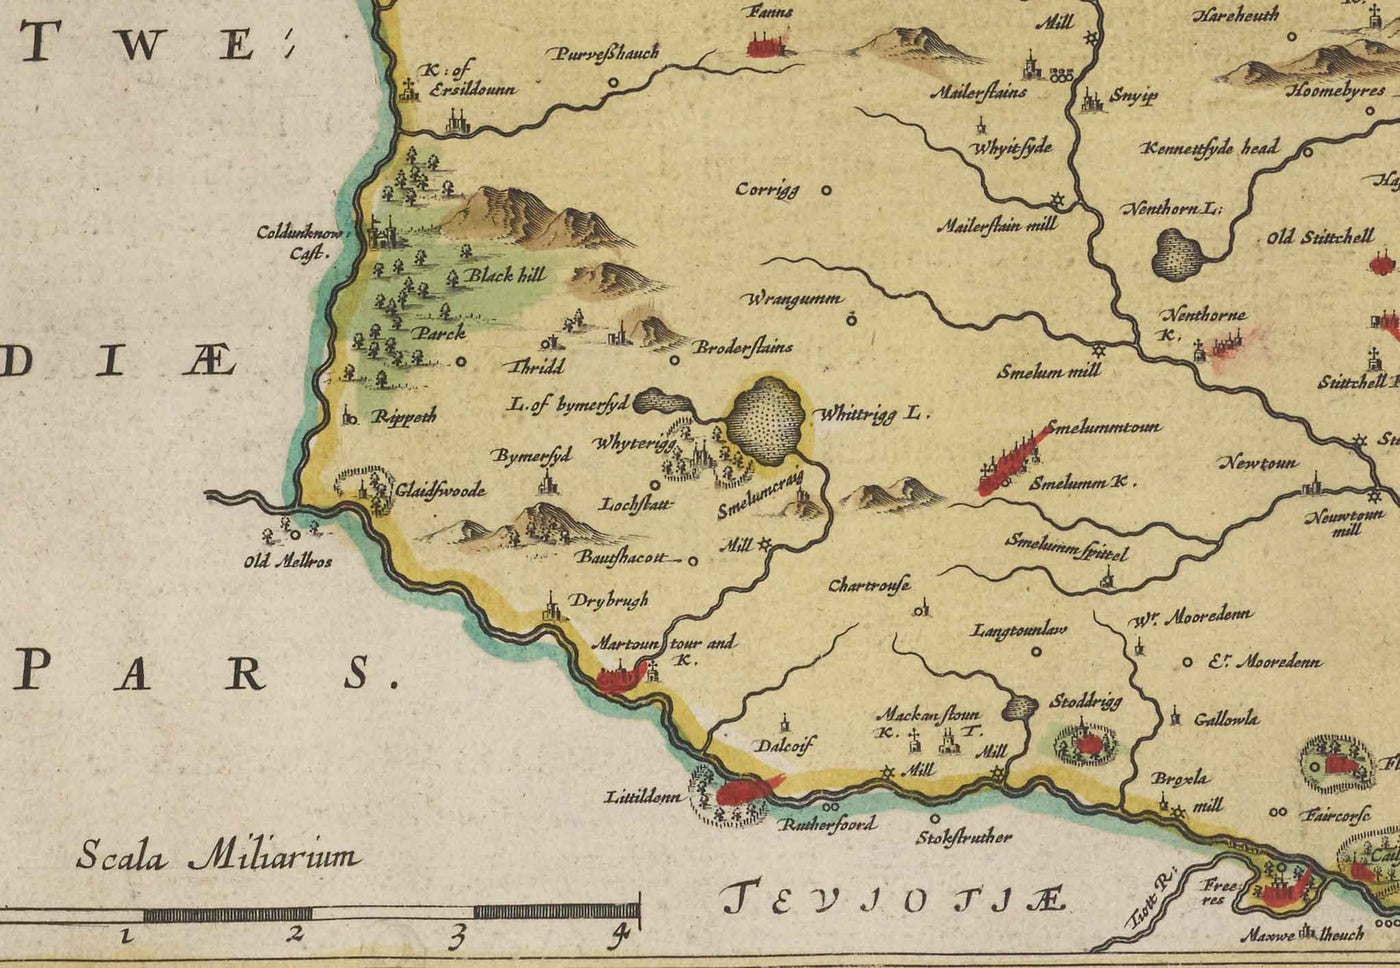 Old Map of Berwickshire in 1665 by Joan Blaeu - Eyemouth, Ayton, Coldingham, Tweedmouth, Hutton